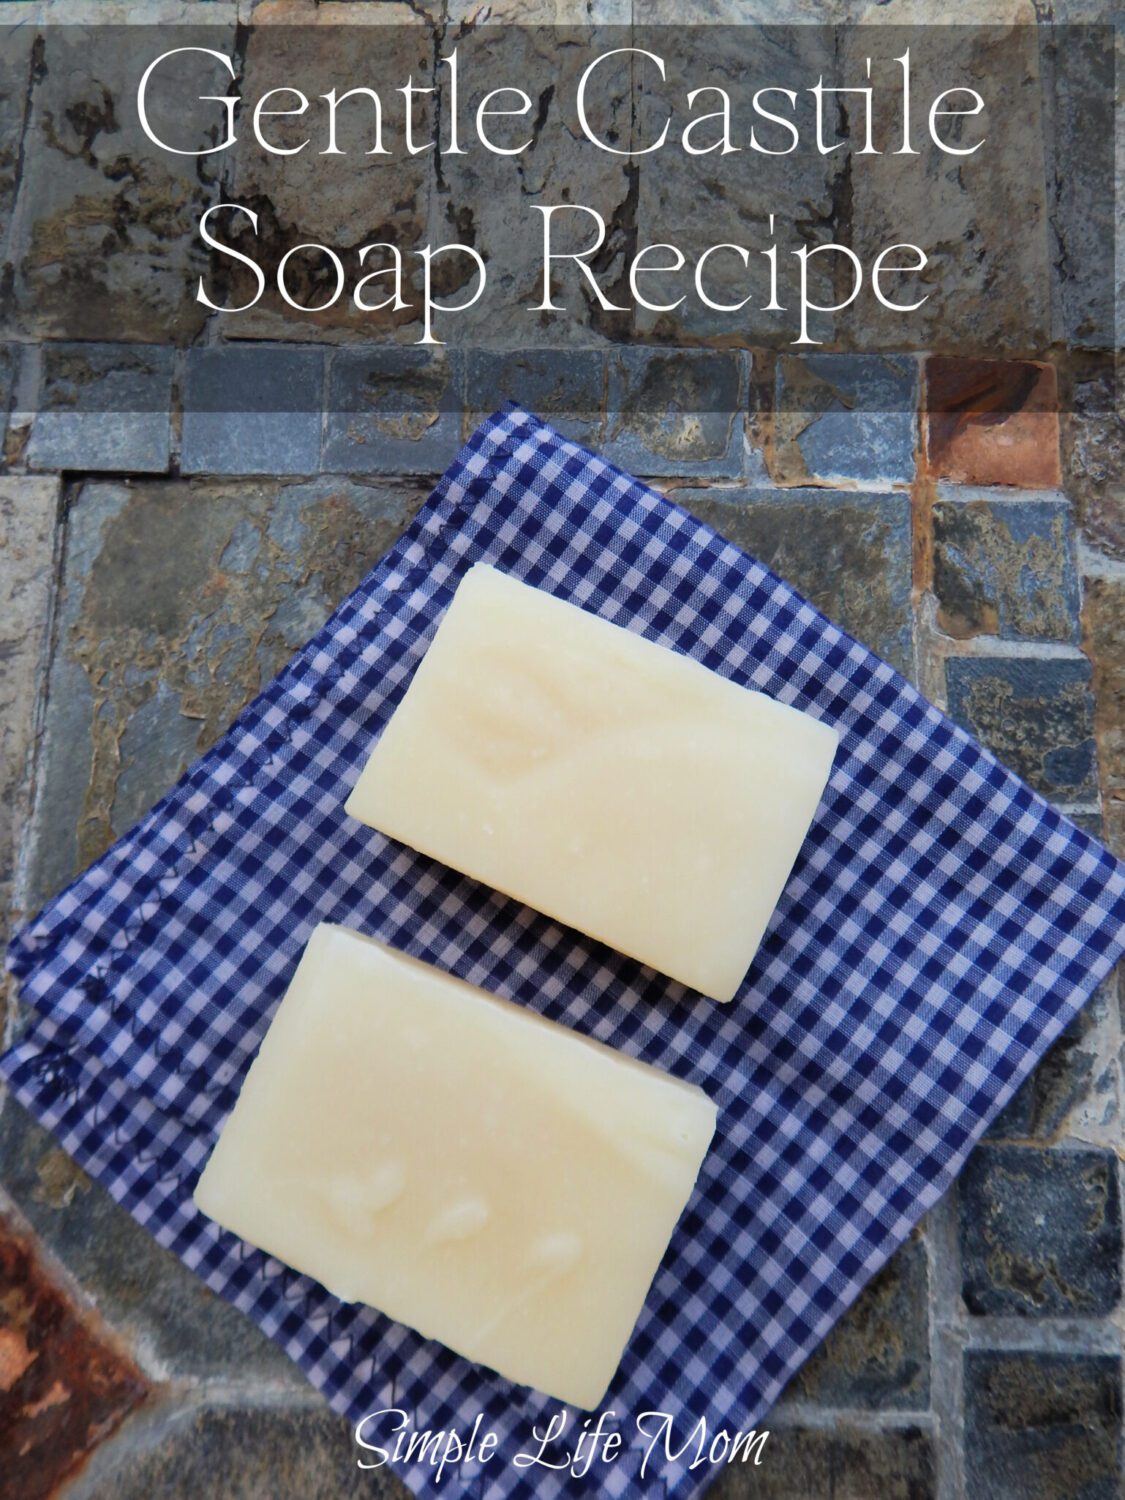 Simple Castile Soap Recipe + Full DIY Instructions